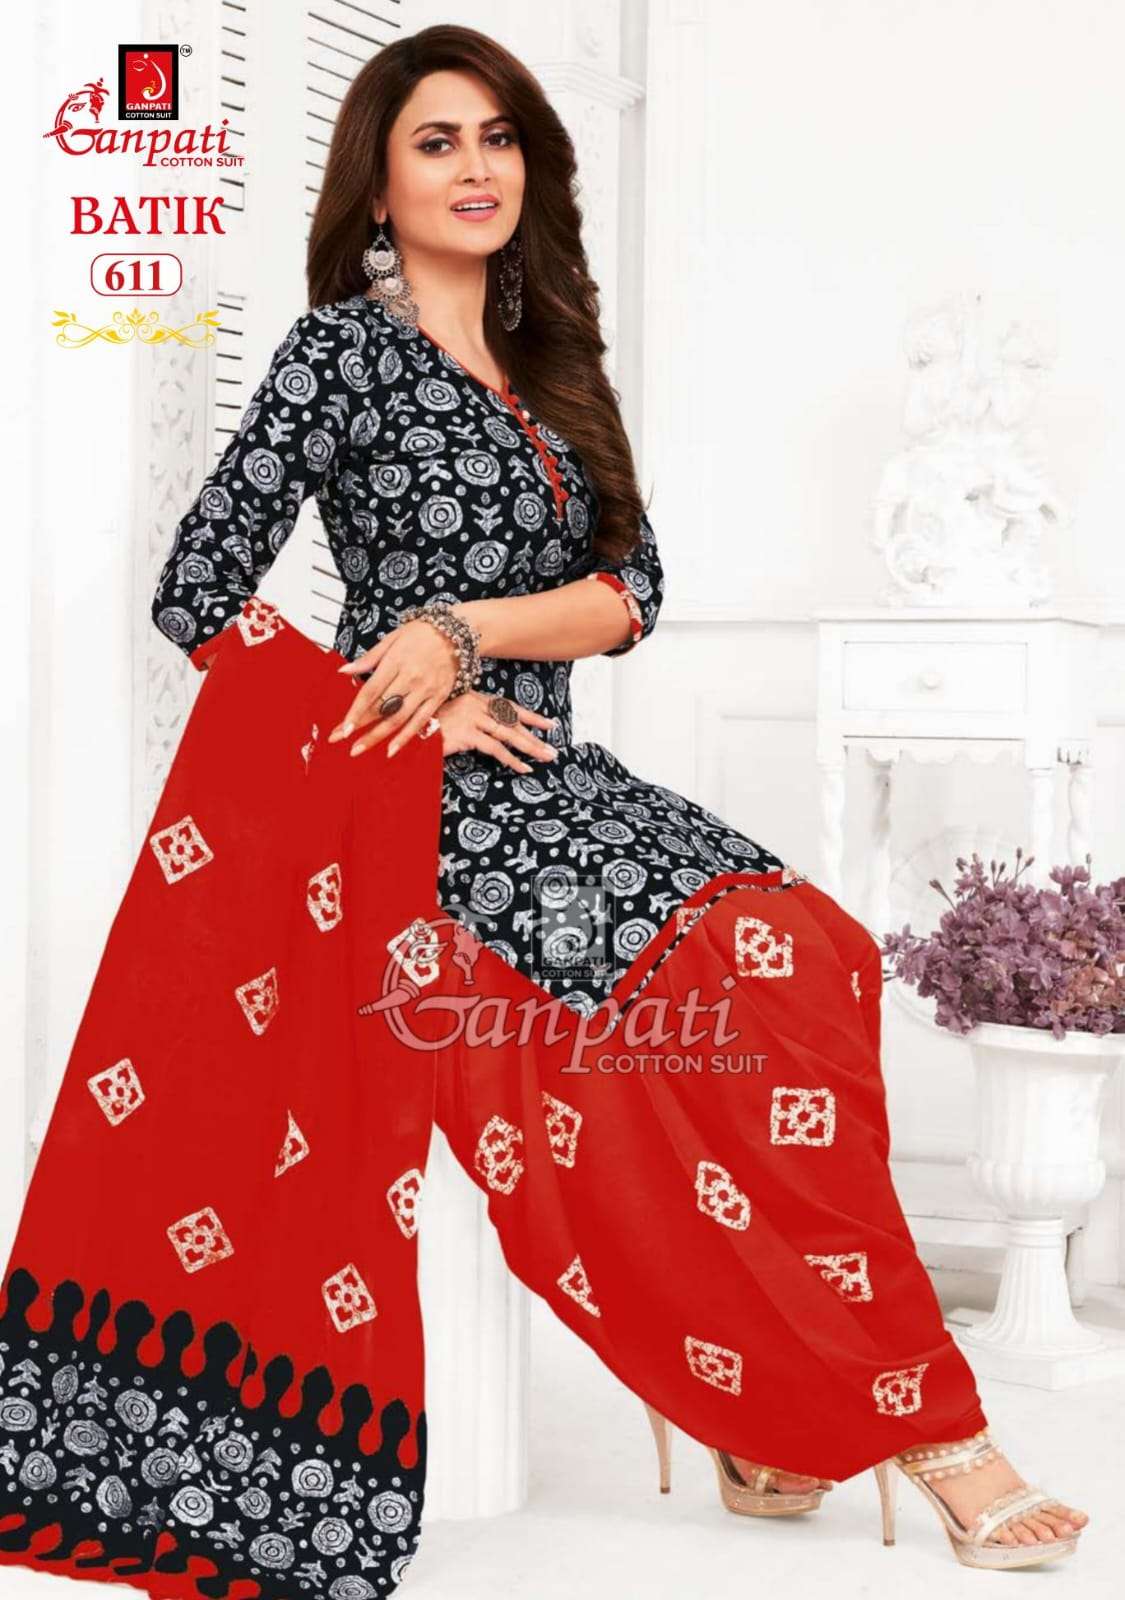 Batik Vol-6 By Ganpati Cotton Suits 601 To 615 Series Beautiful Festive Suits Colorful Stylish Fancy Casual Wear & Ethnic Wear Pure Cotton Print Dresses At Wholesale Price